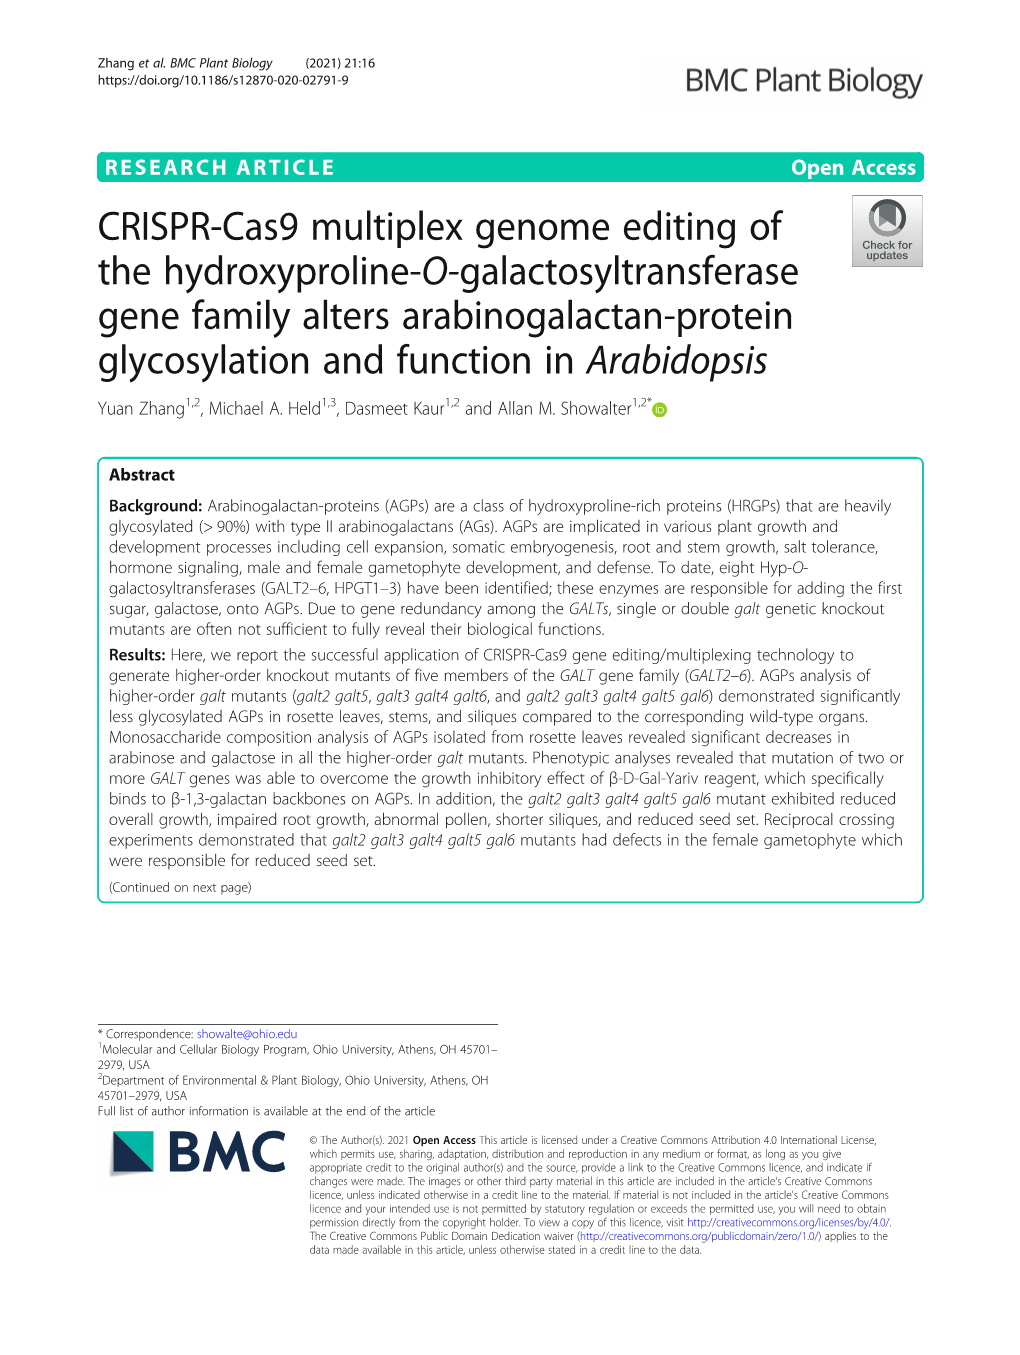 CRISPR-Cas9 Multiplex Genome Editing of the Hydroxyproline-O